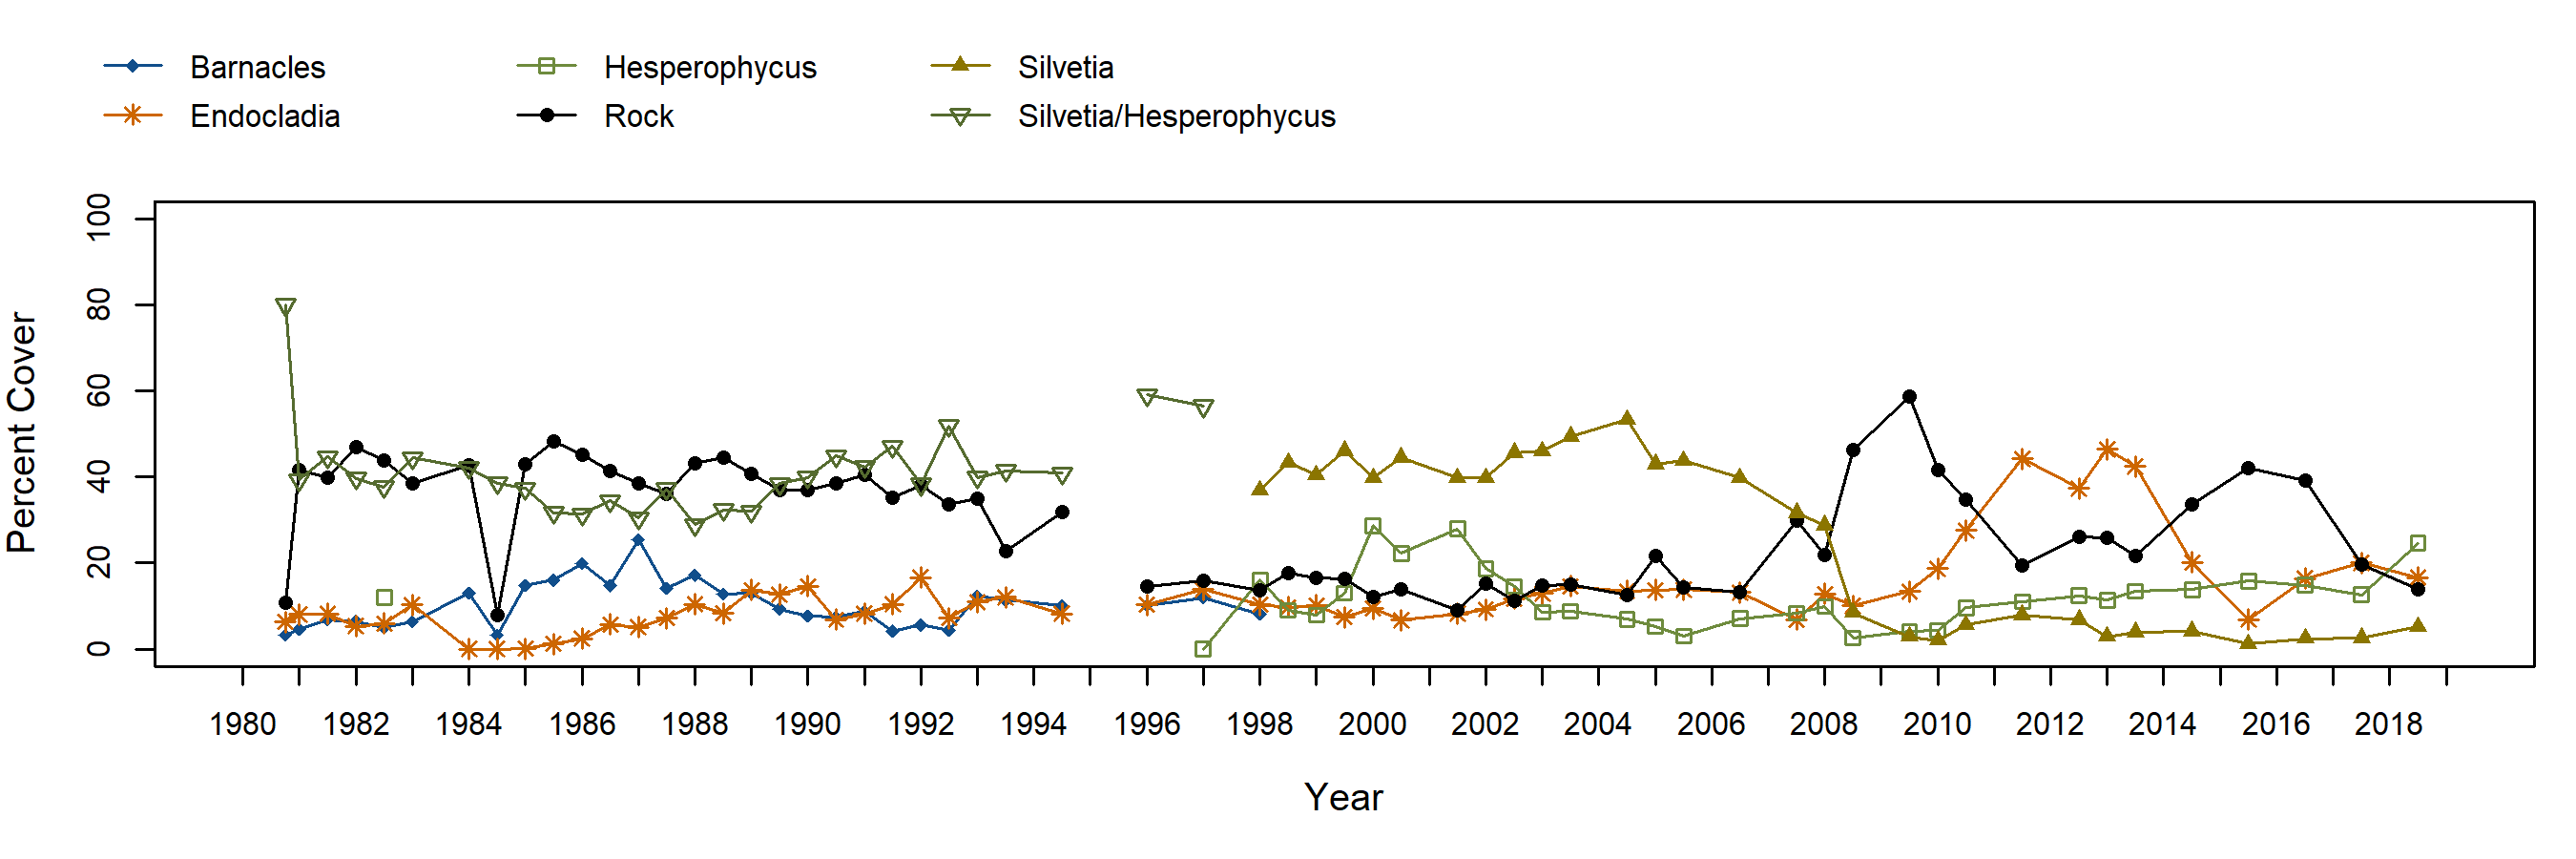 Cat Rock Silvetia trend plot